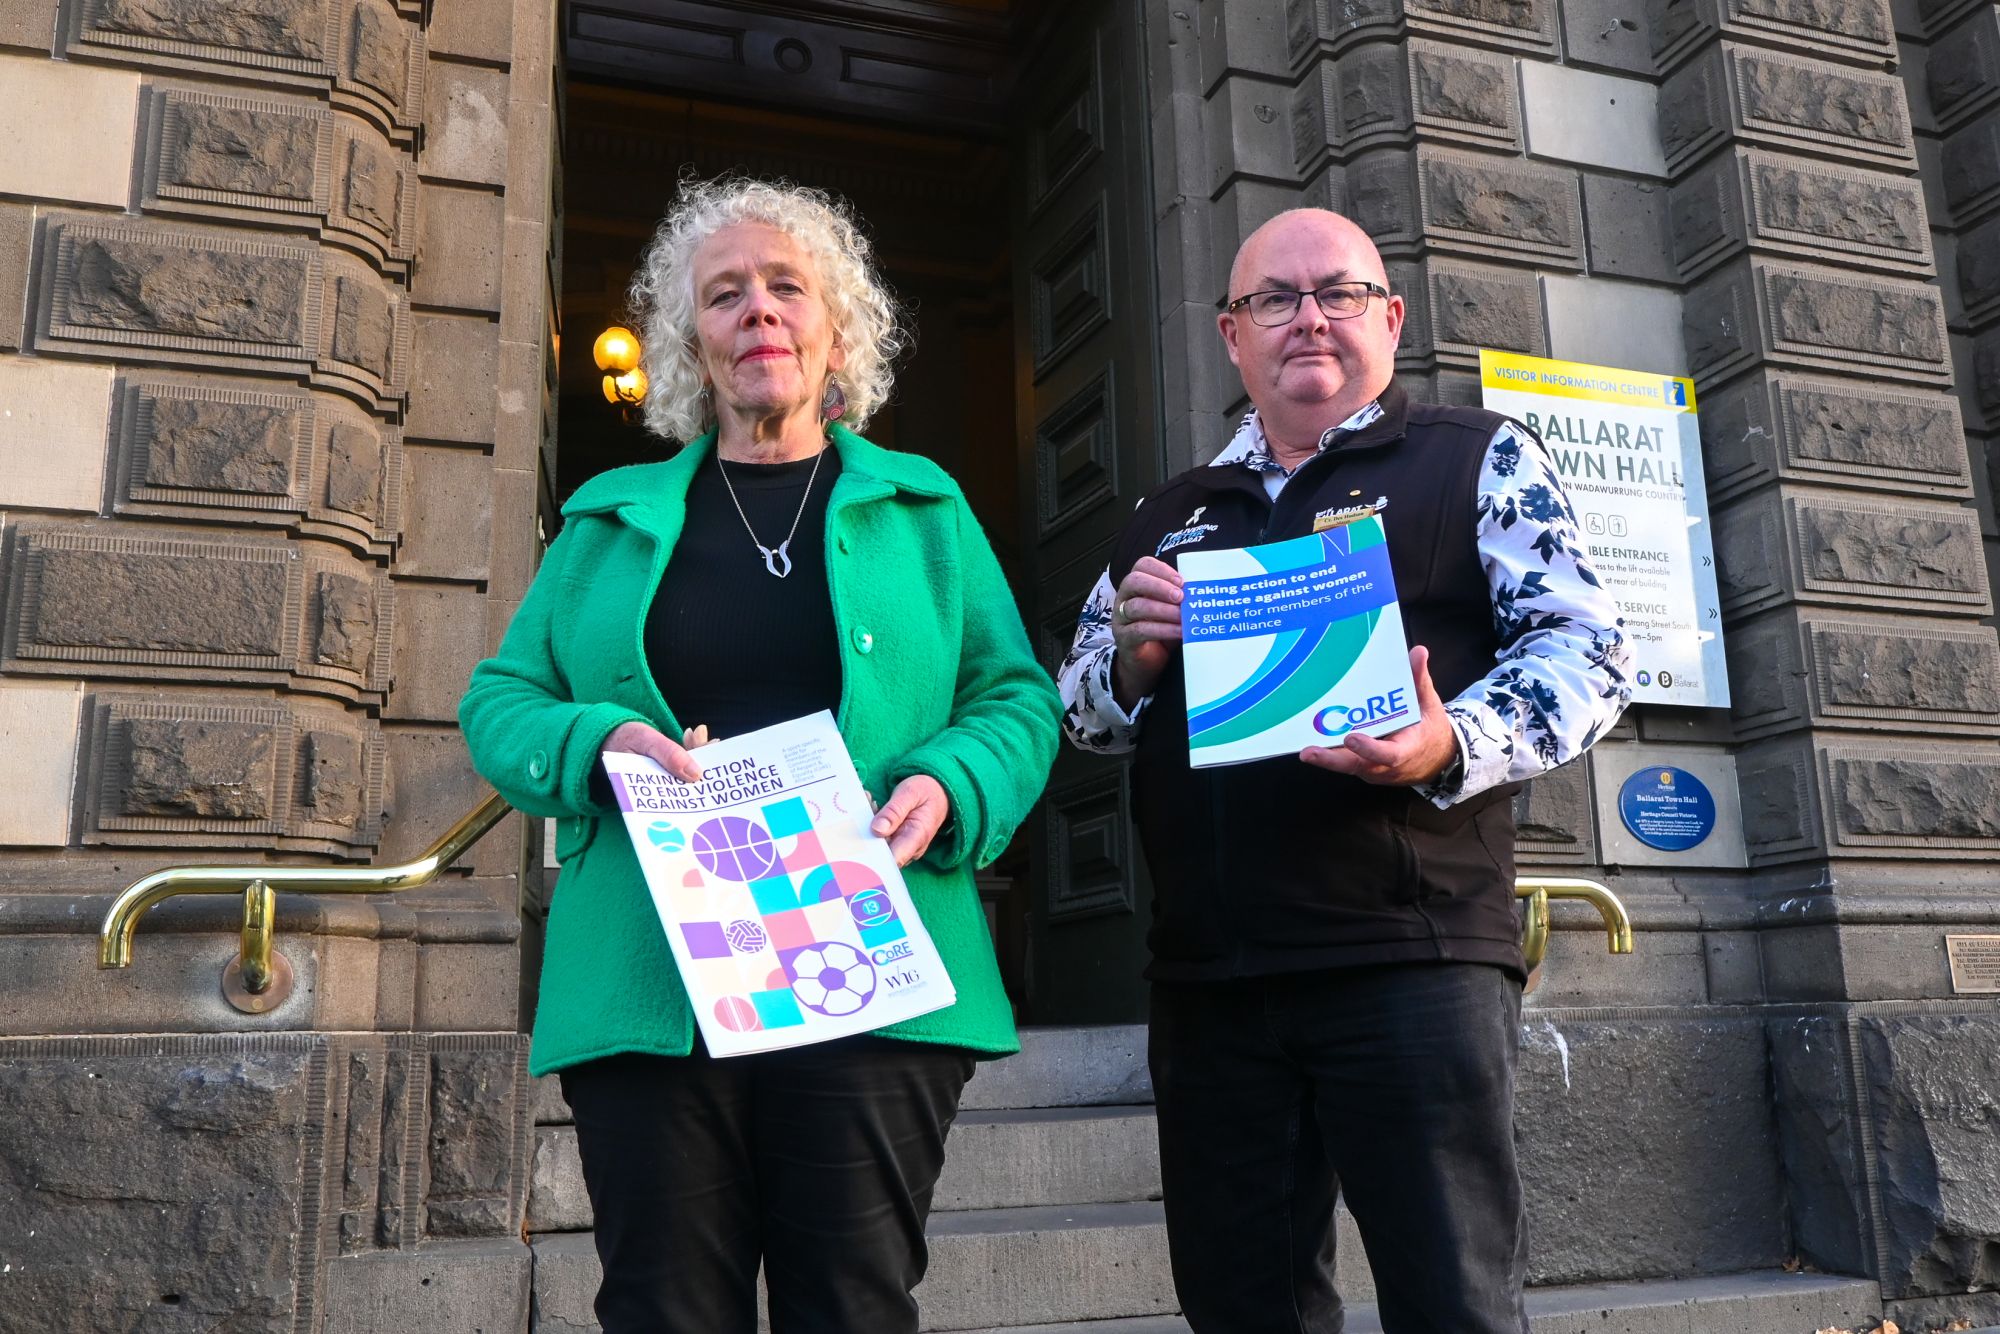 CEO WHG Marianne Hendron and Mayor Cr Des Hudson outside the Ballarat Town Hall on Sturt Street